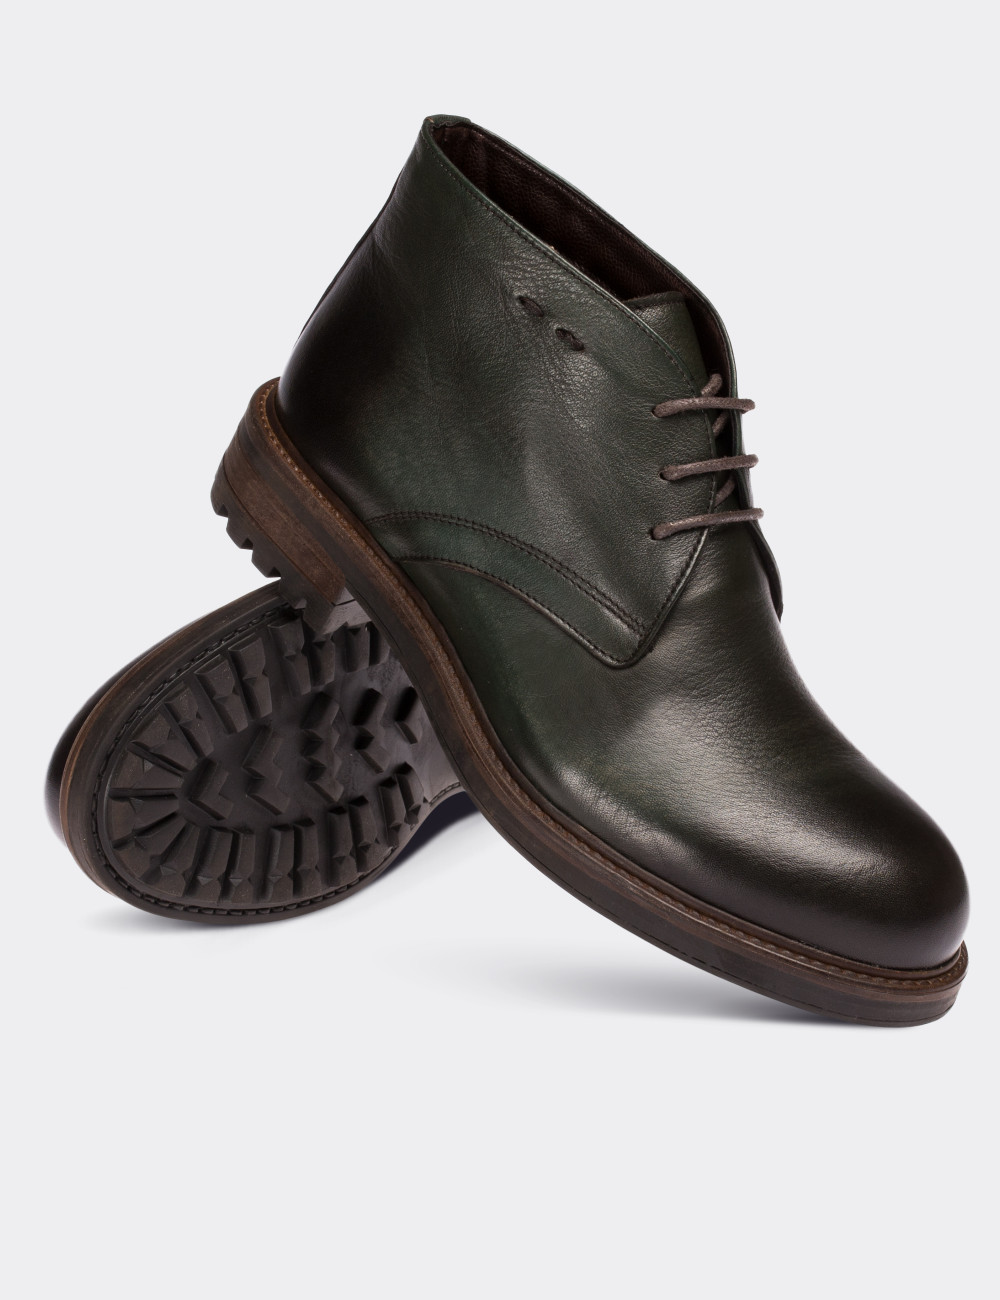 Green  Leather Vintage Desert Boots - 01295MYSLC02